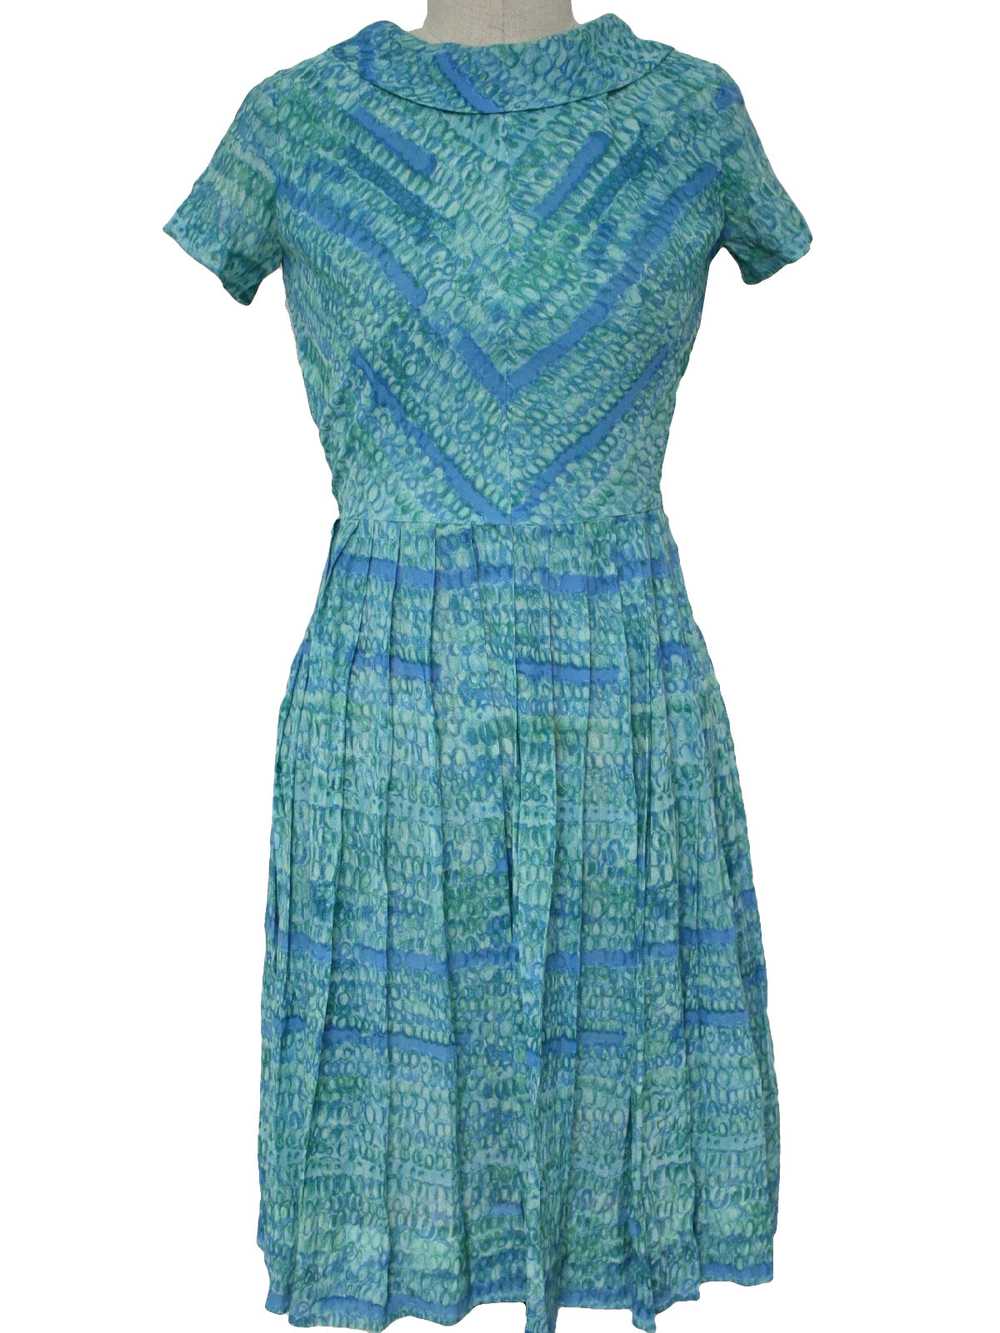 1950's R Day Dress - image 1